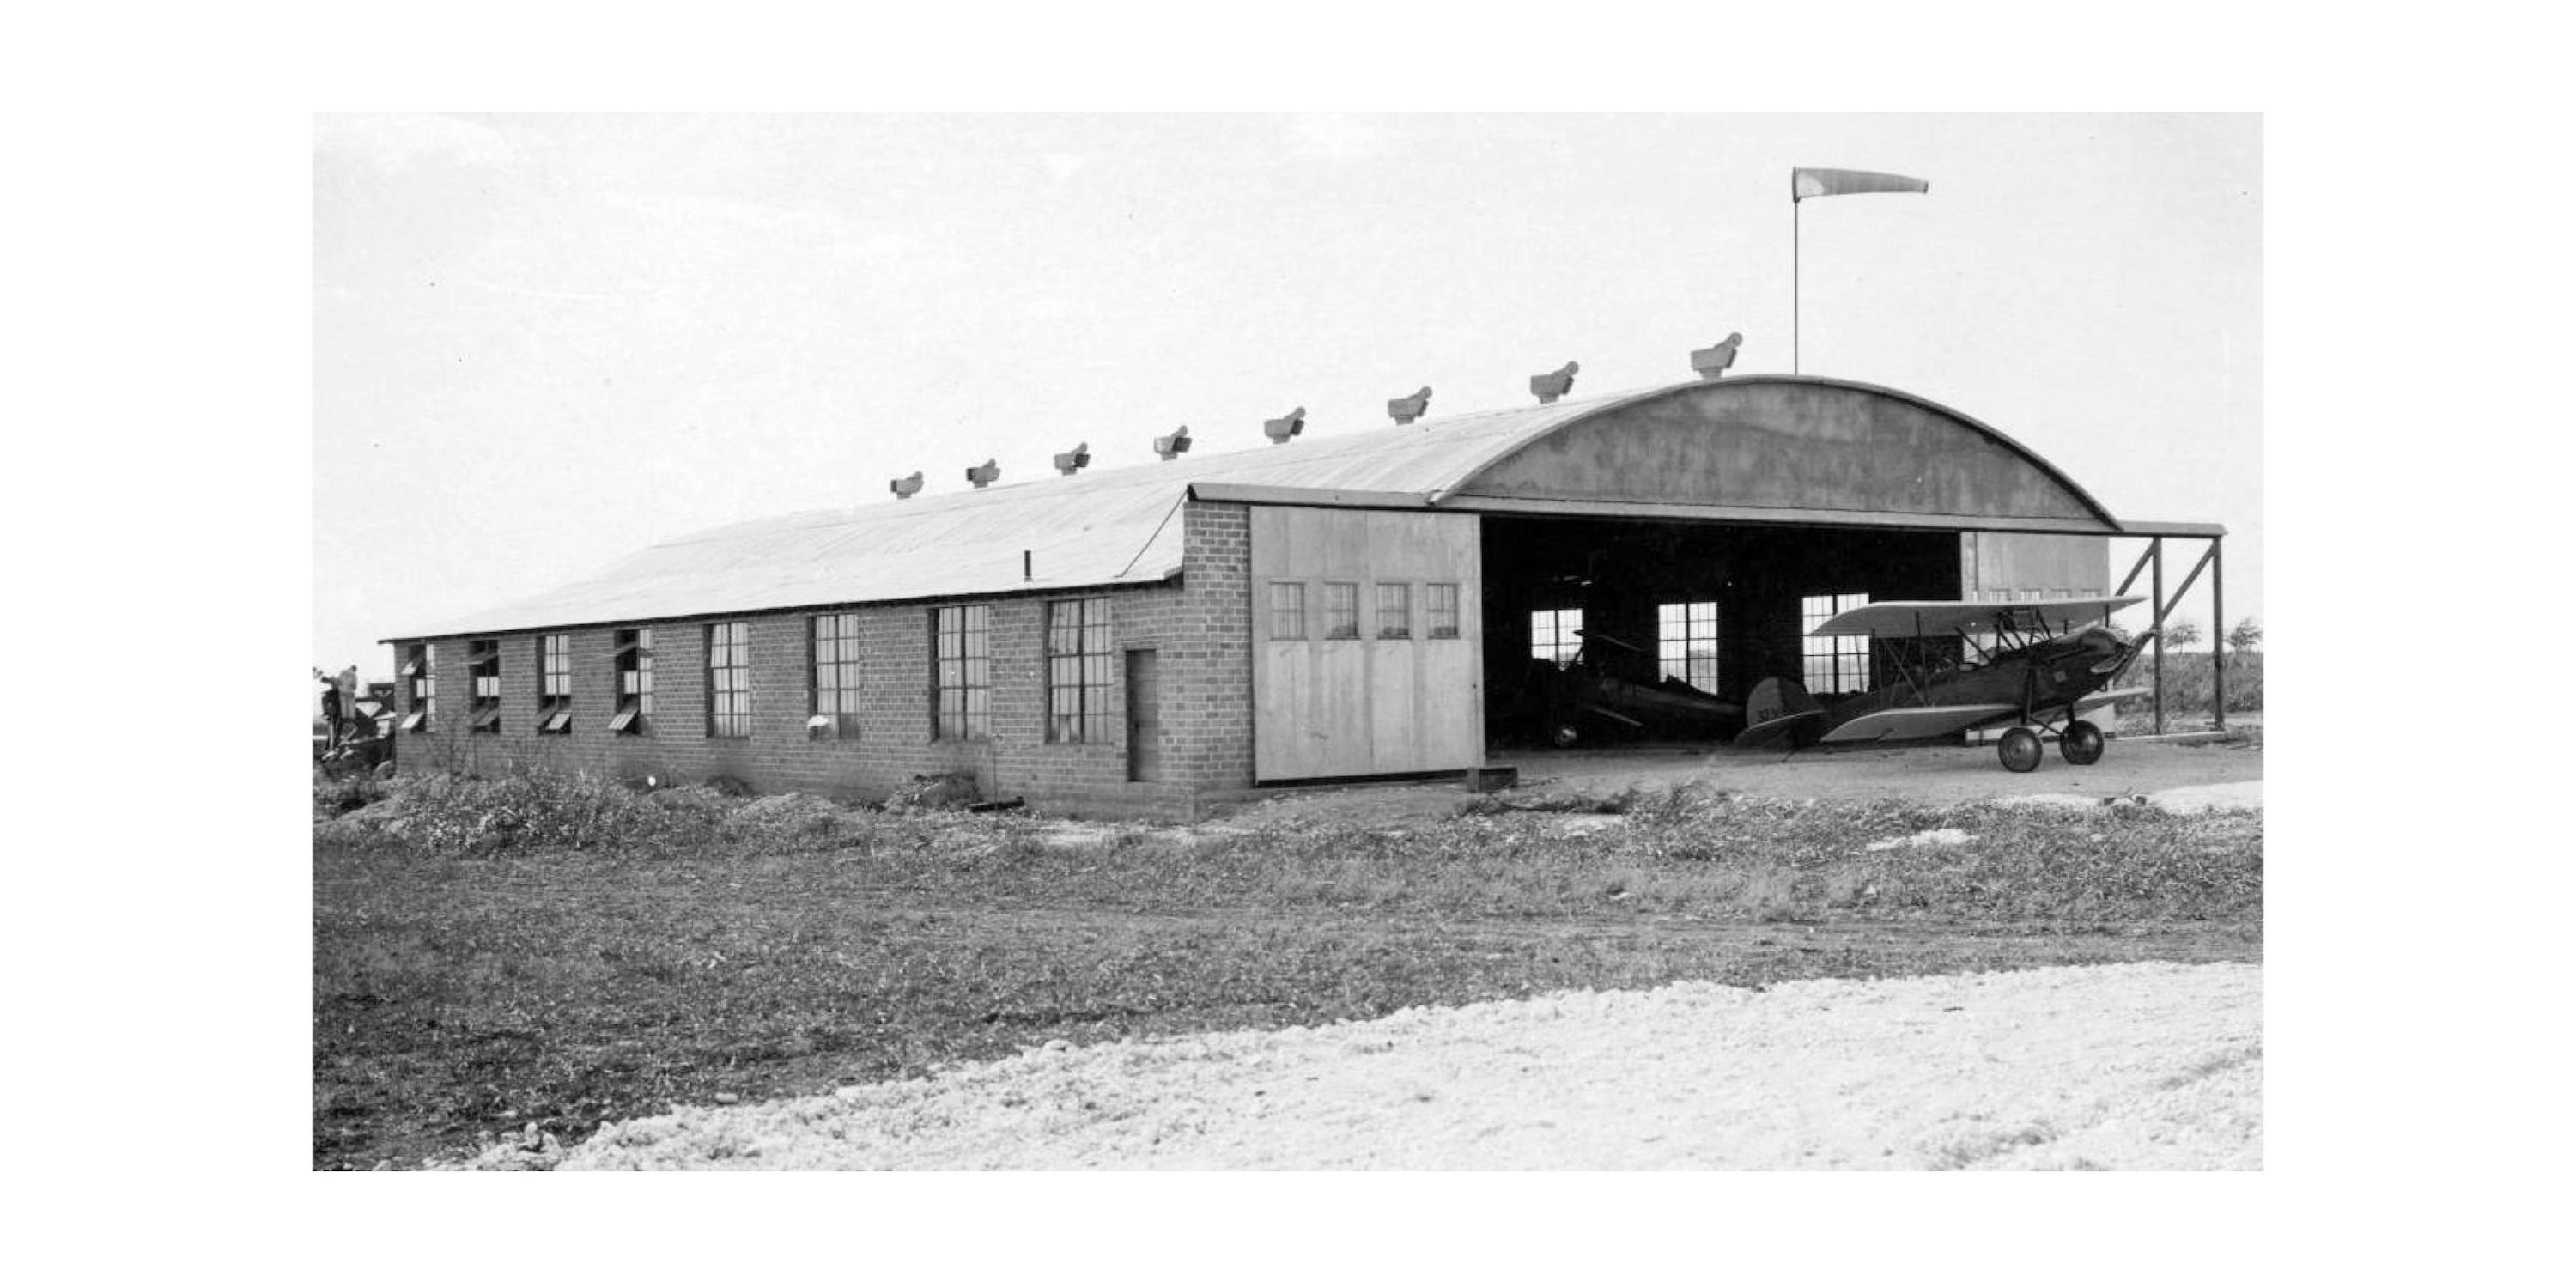 Hangar Exterior Vintage 3000x1500px.jpg